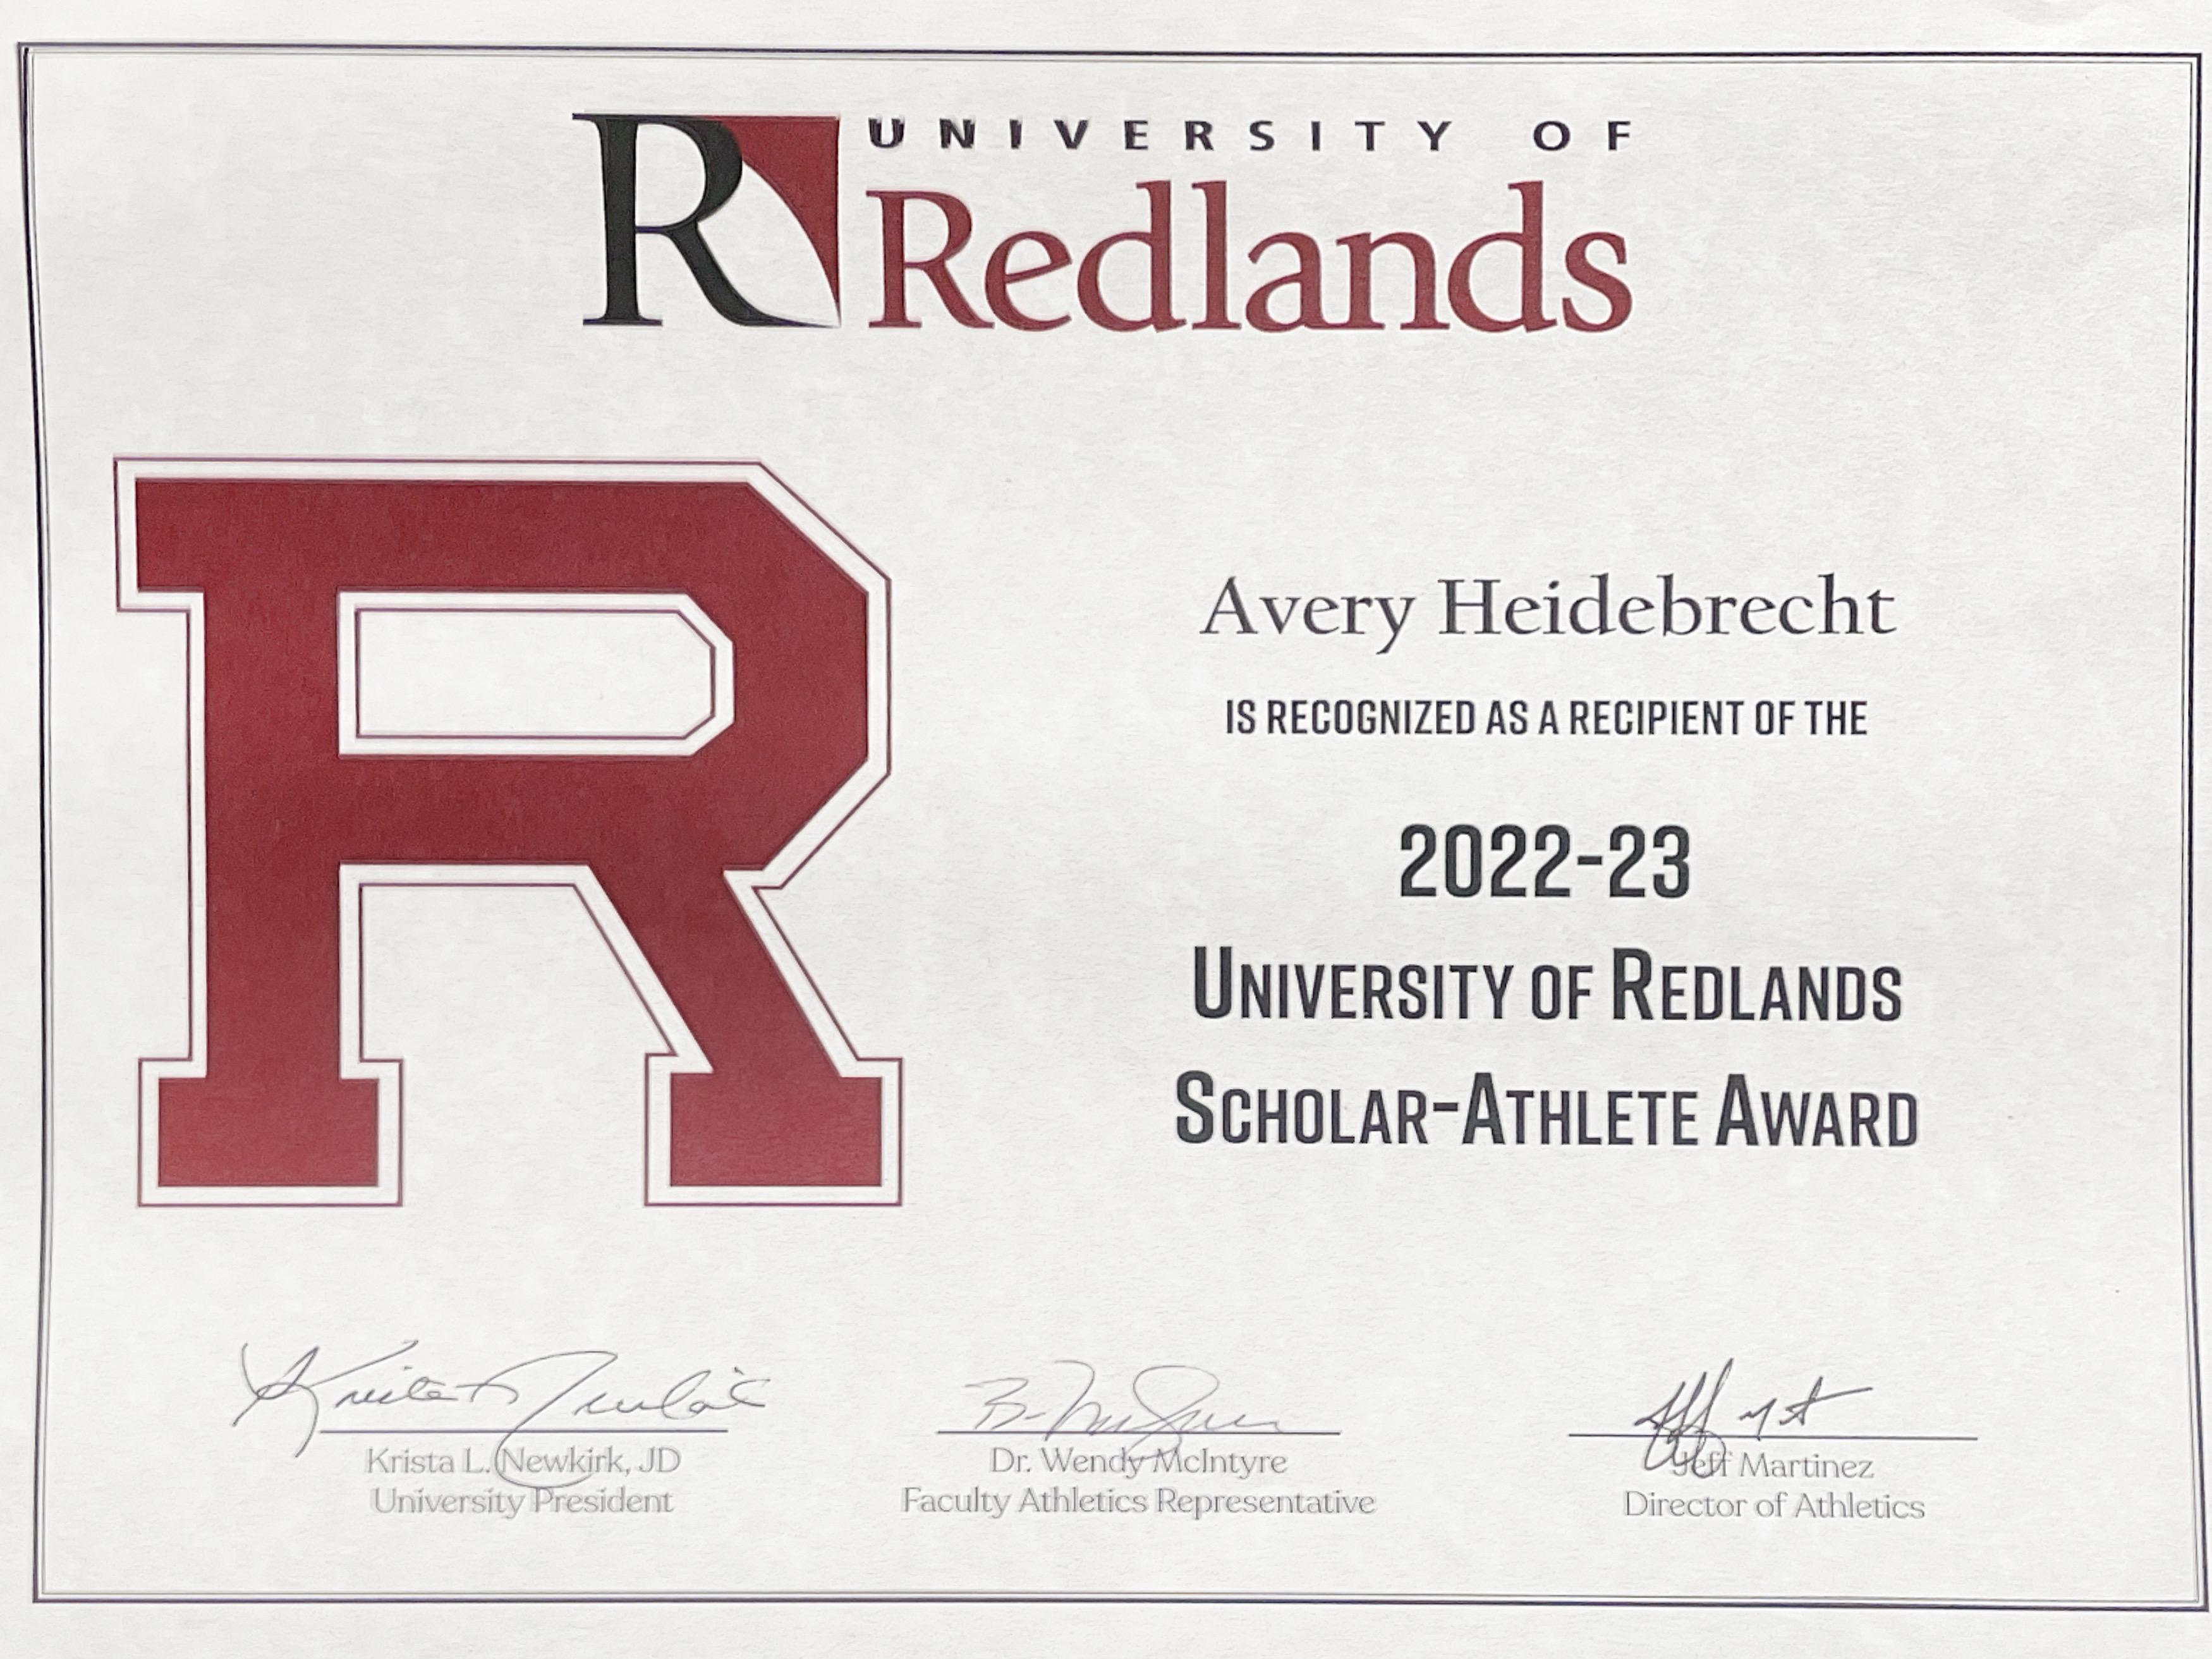 Scholar - Athlete Award Certificate from University of Redlands